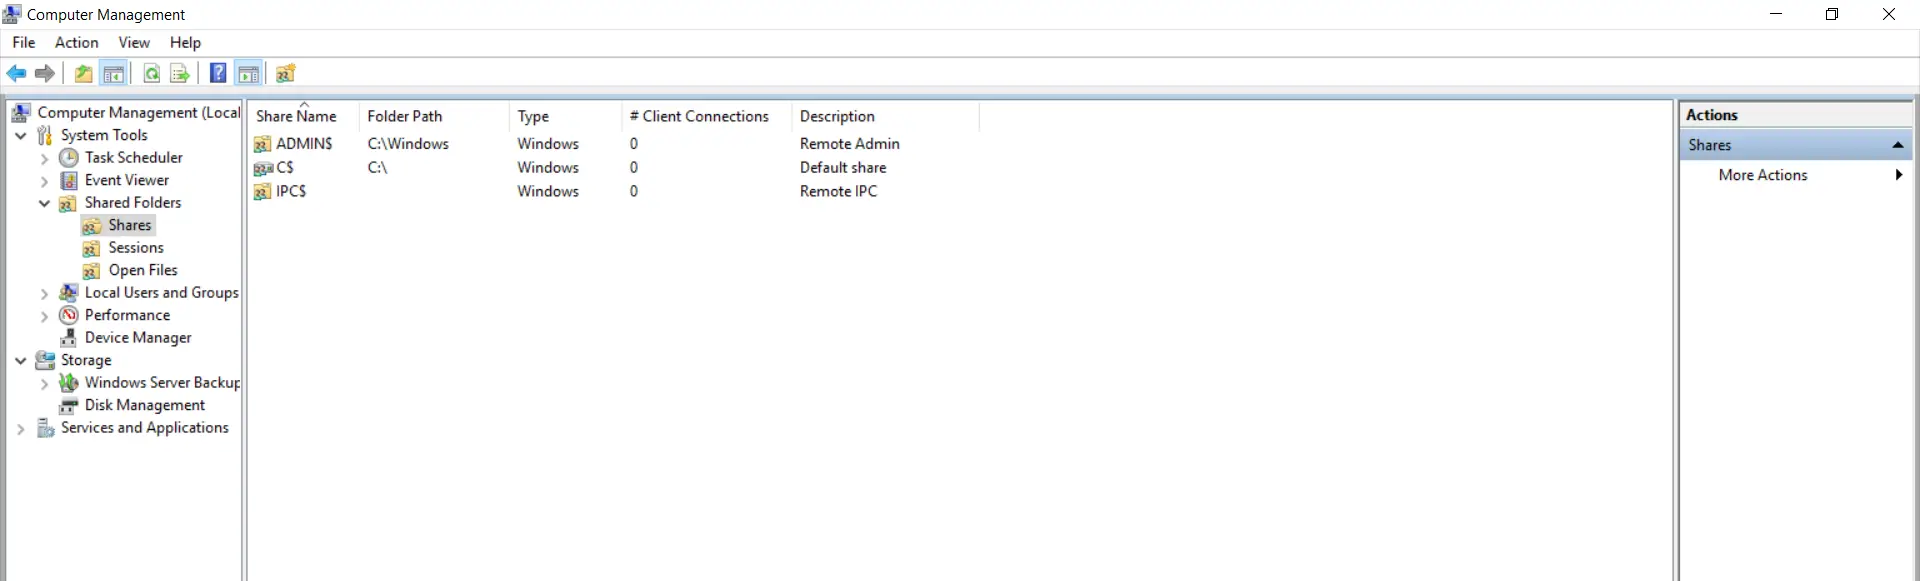 Two-Factor Authentication (2FA/MFA) for Windows Logon RDP go to shared folders